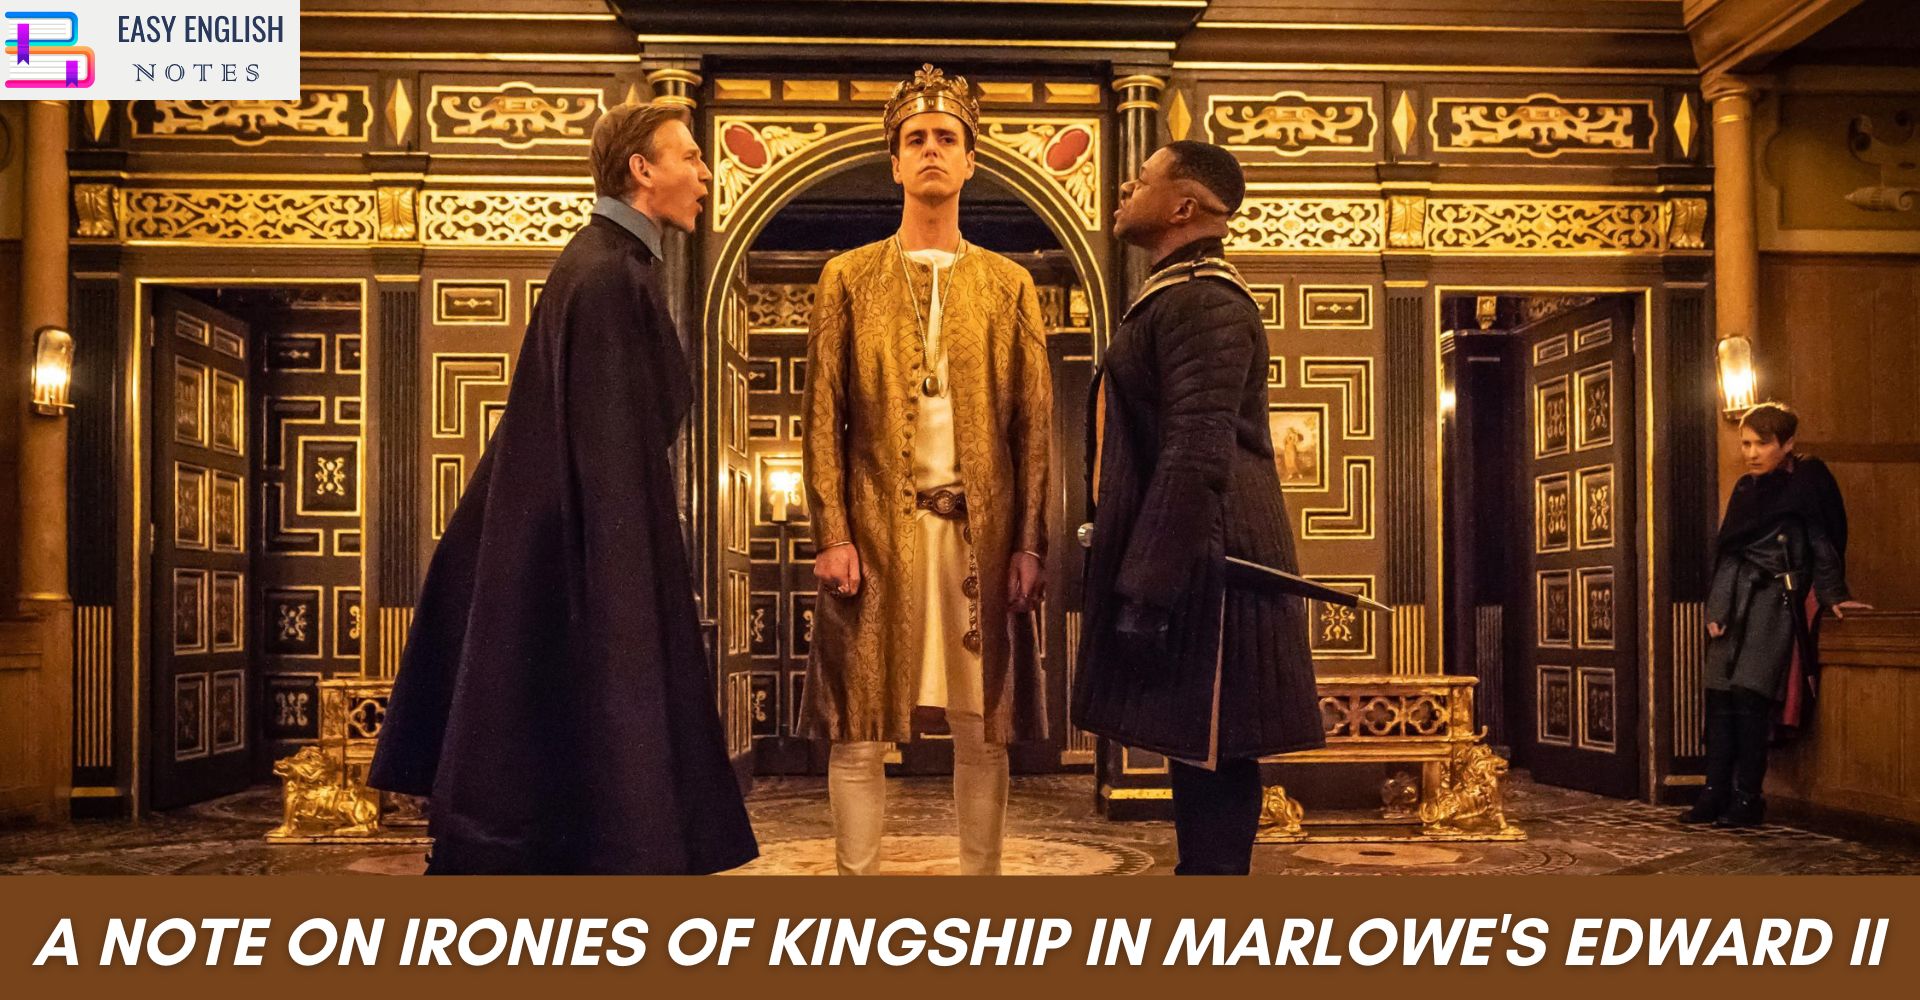 Exploring the Ironies of Kingship in Marlowe's "Edward II"